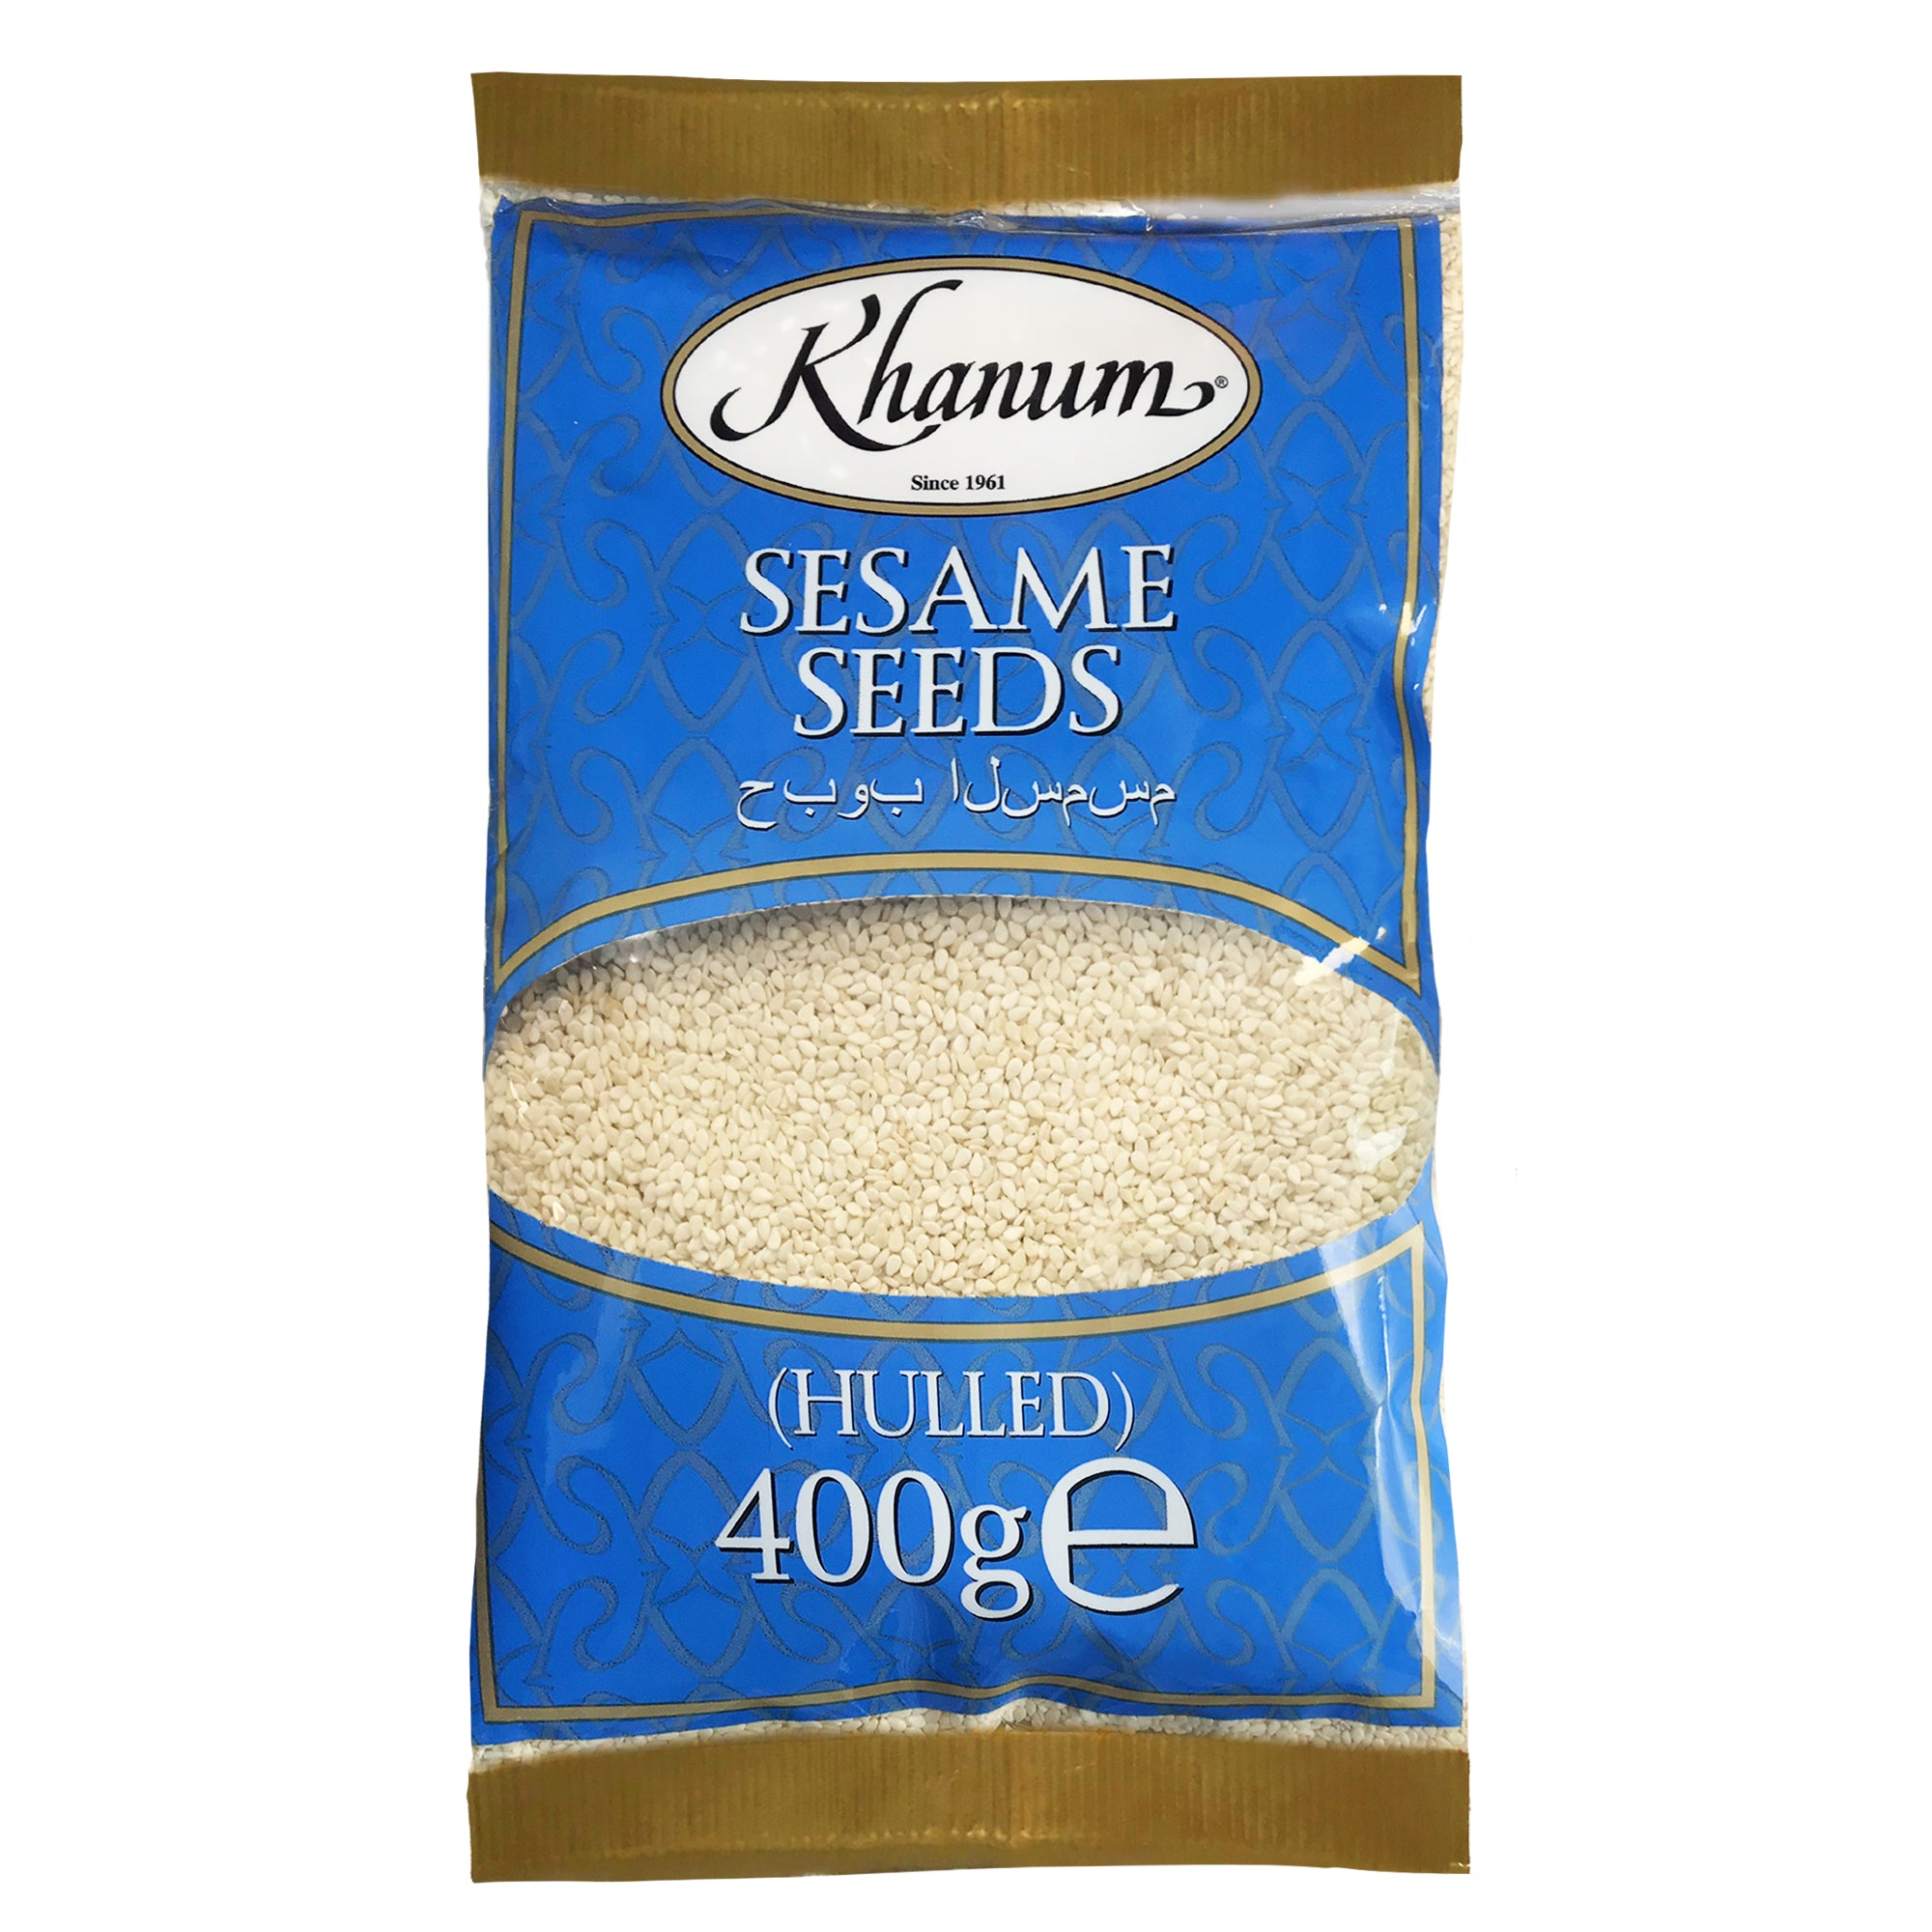 Khanum Sesame Seeds (Hulled) 10x400g